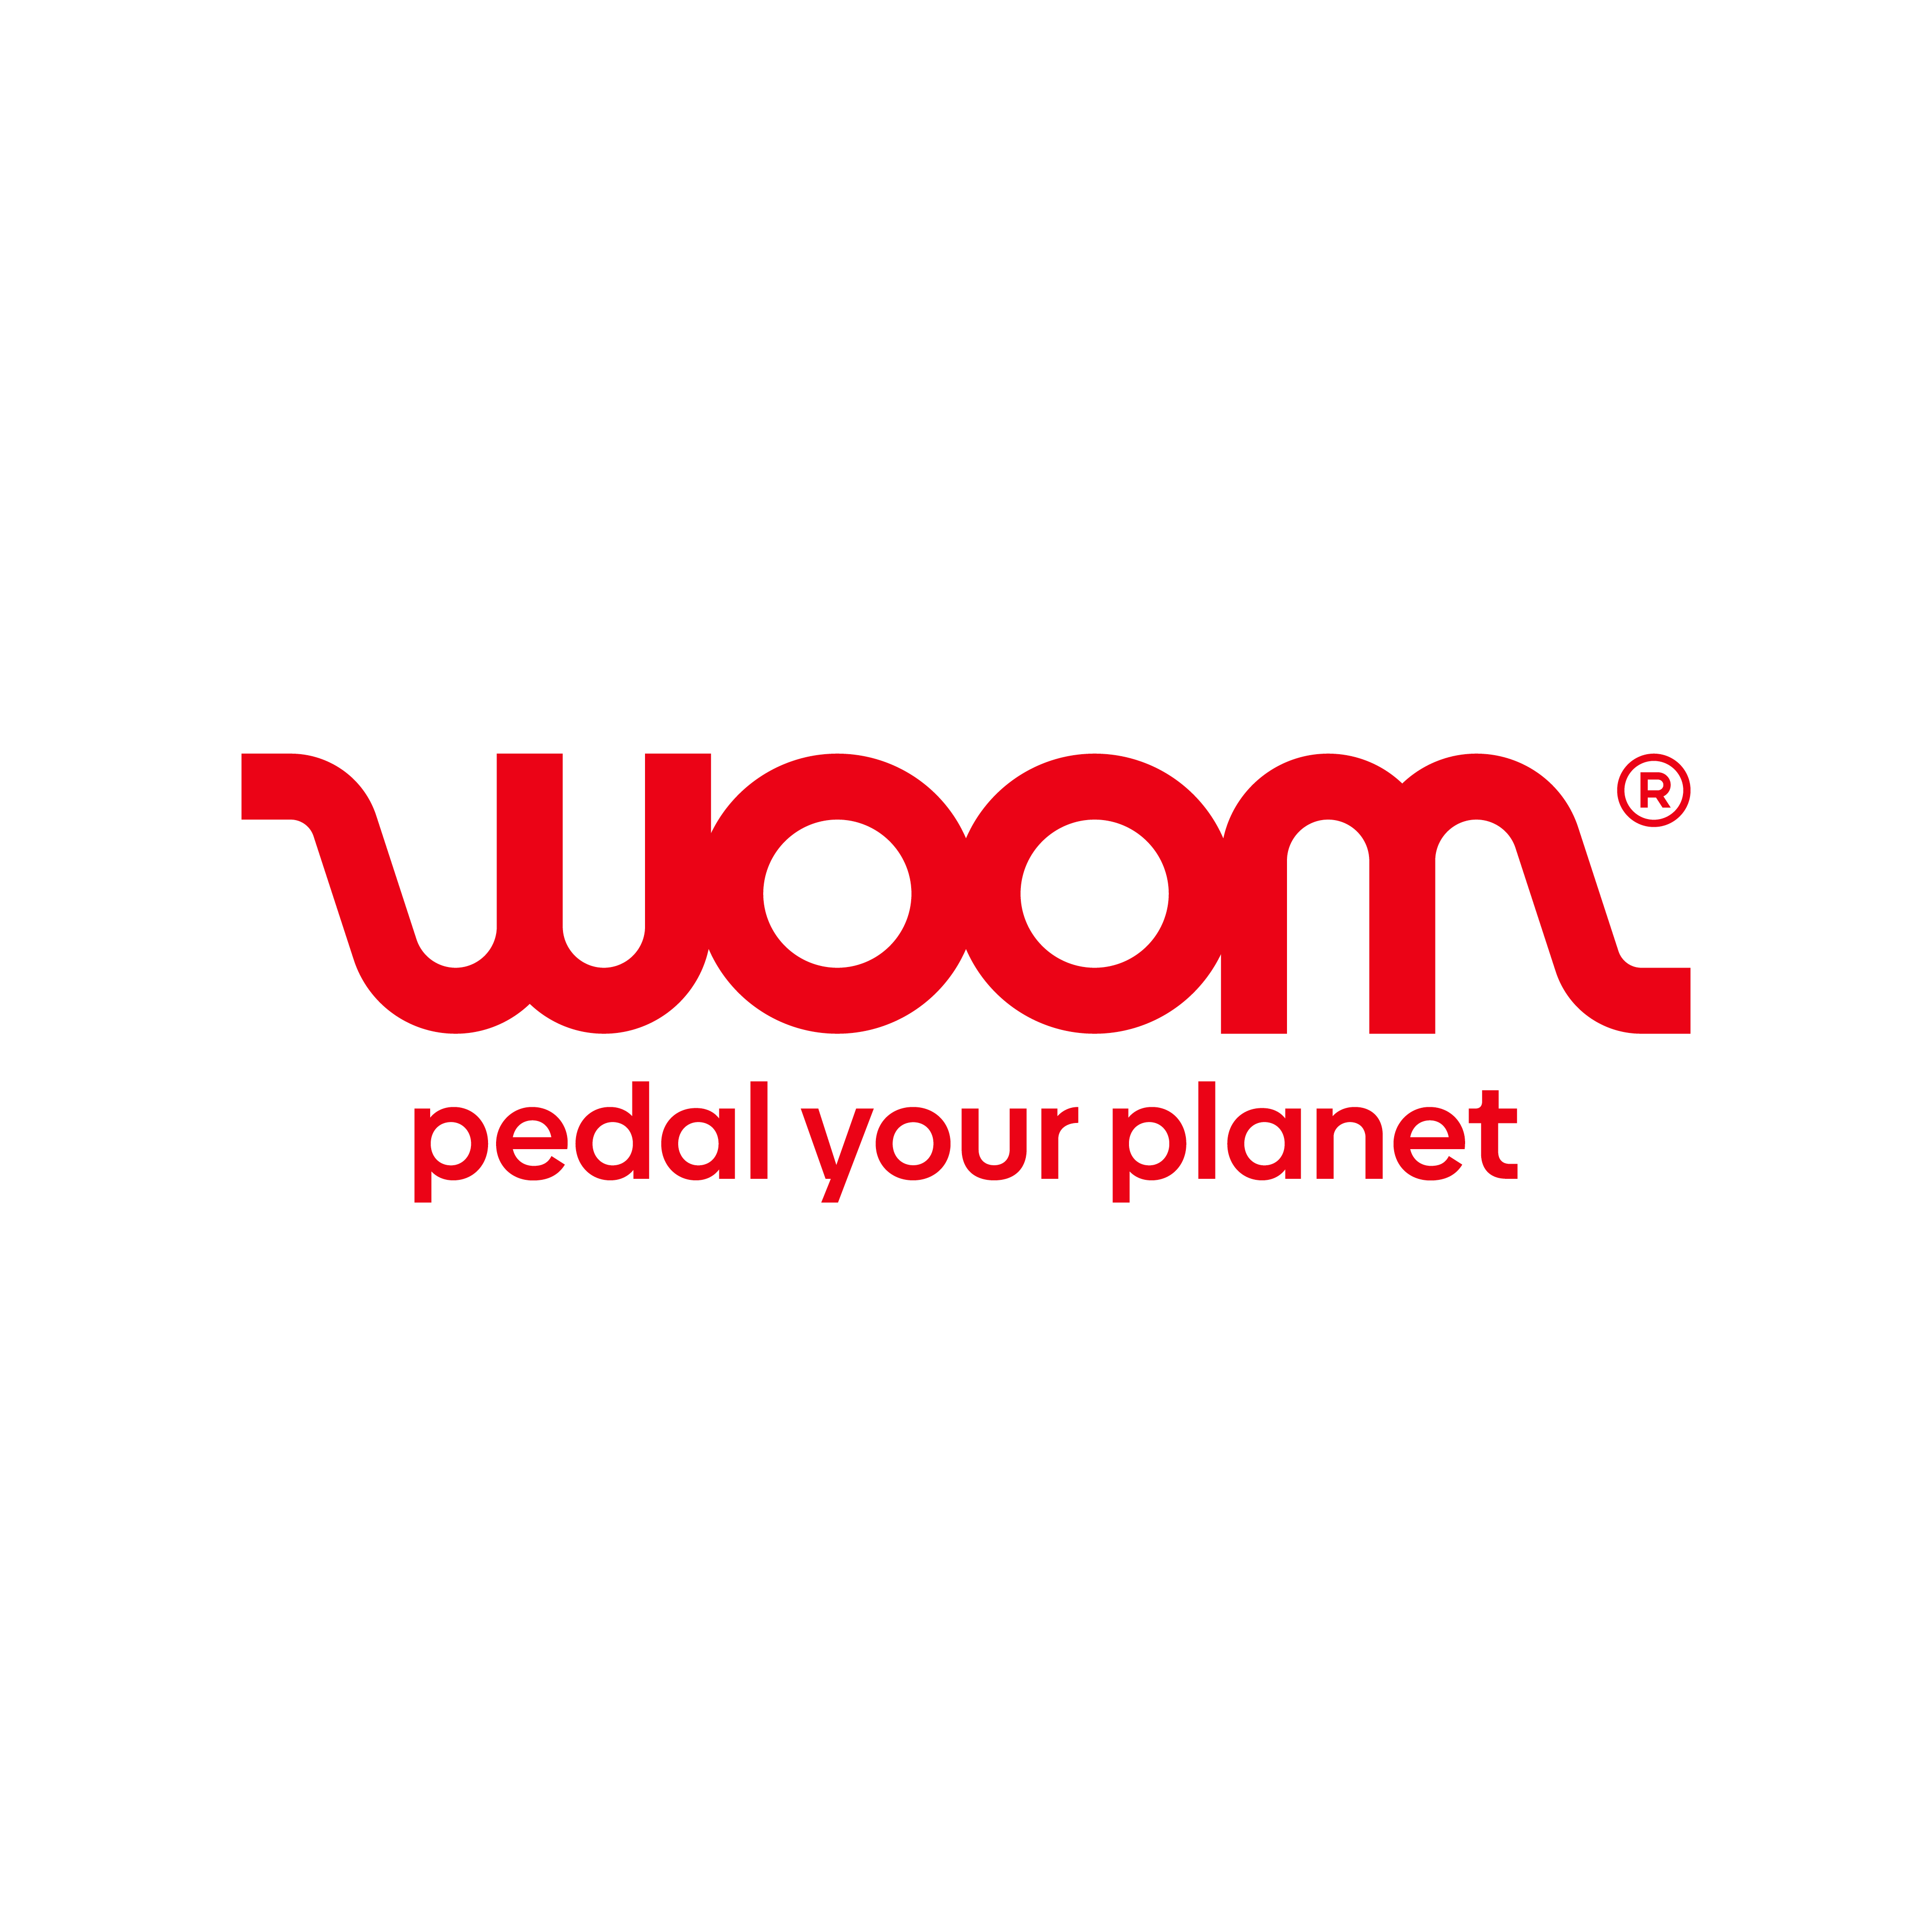 woom Logotype Claim Red 9 Units 3840x3840PX SRGB